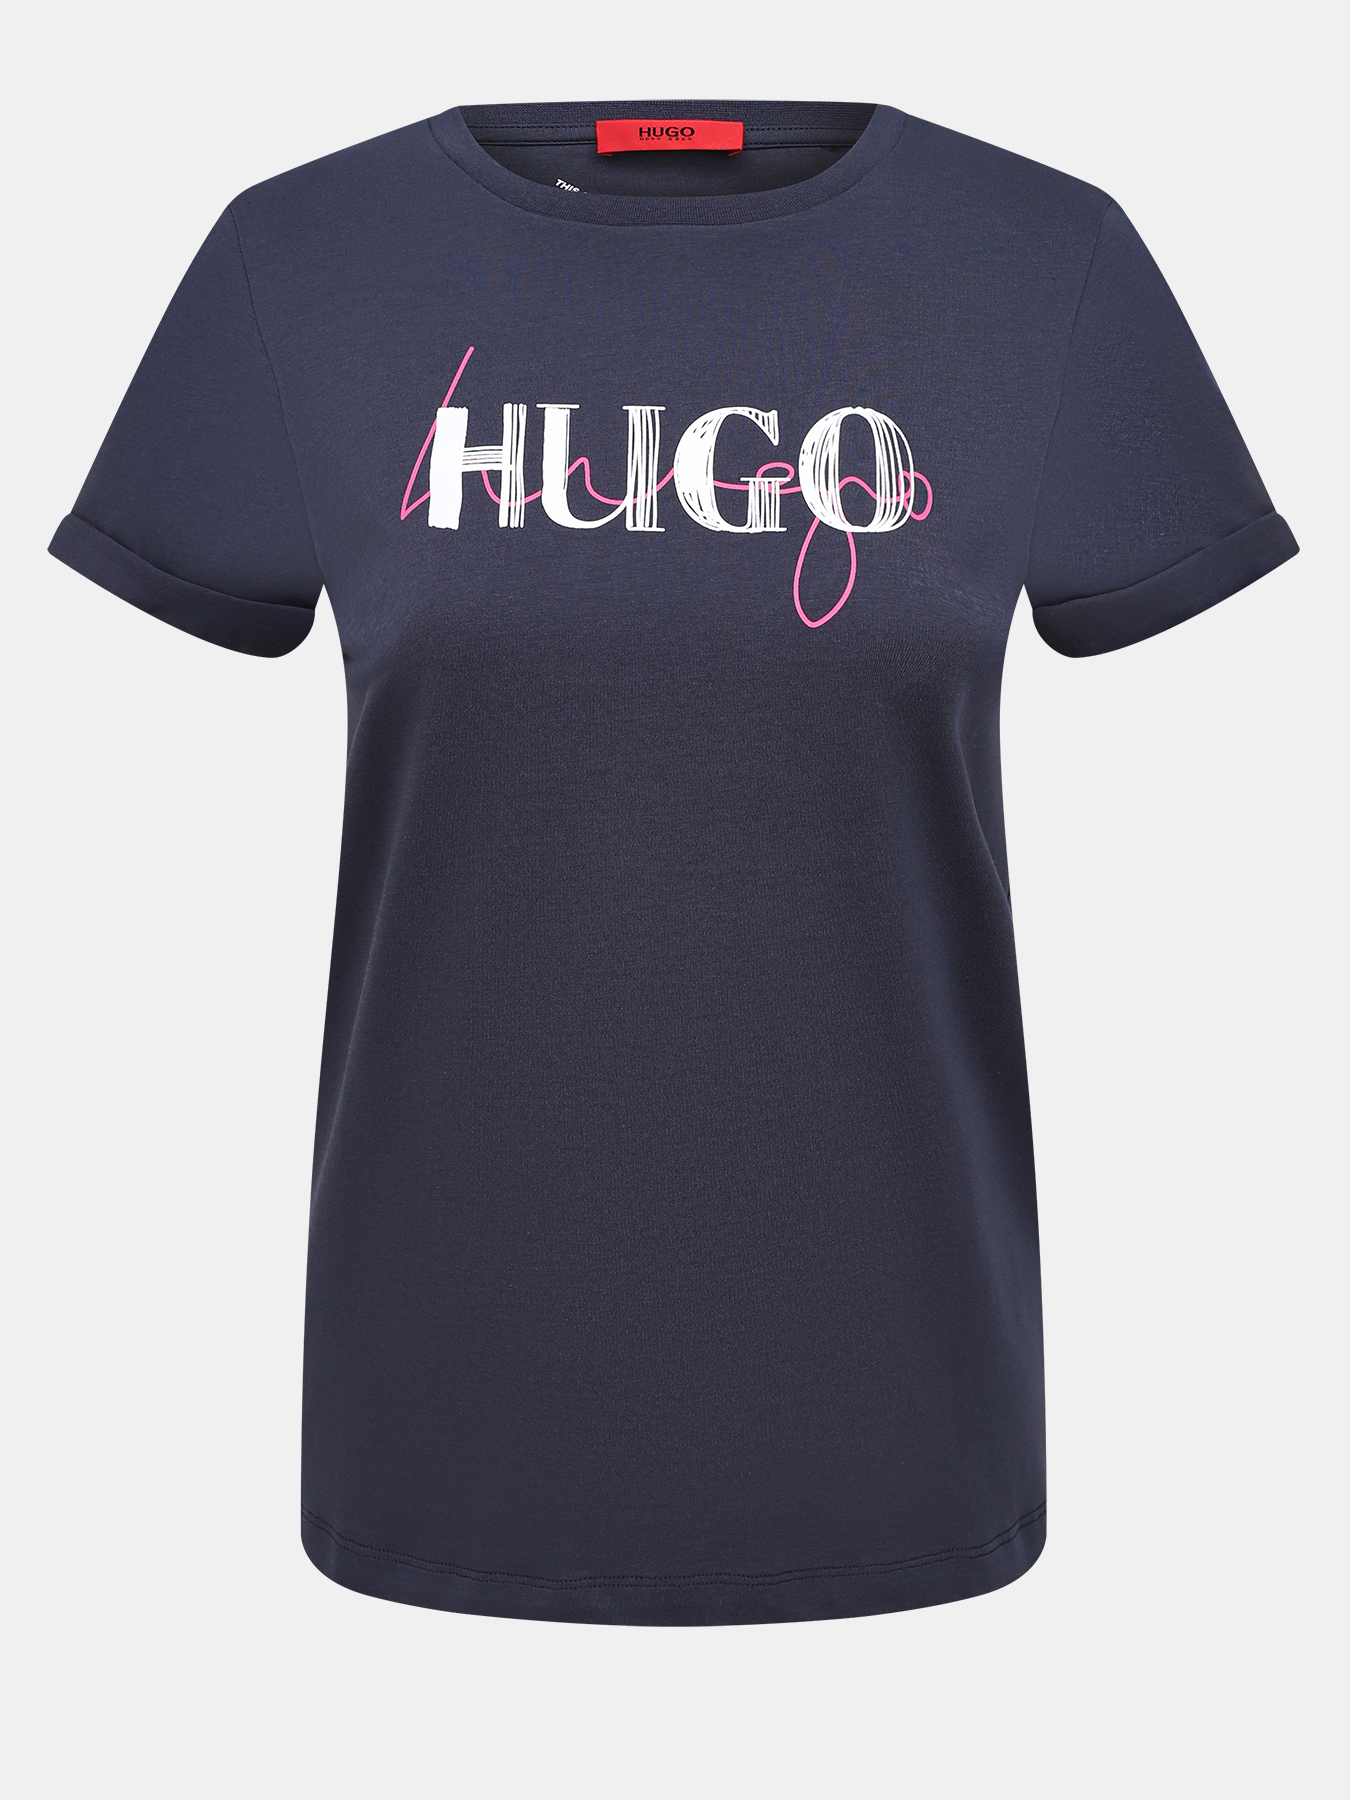 Купить футболку hugo. Футболка Хуго. Hugo the boxy Tee футболка. Футболка Hugo женская. Футболка Hugo с собакой.